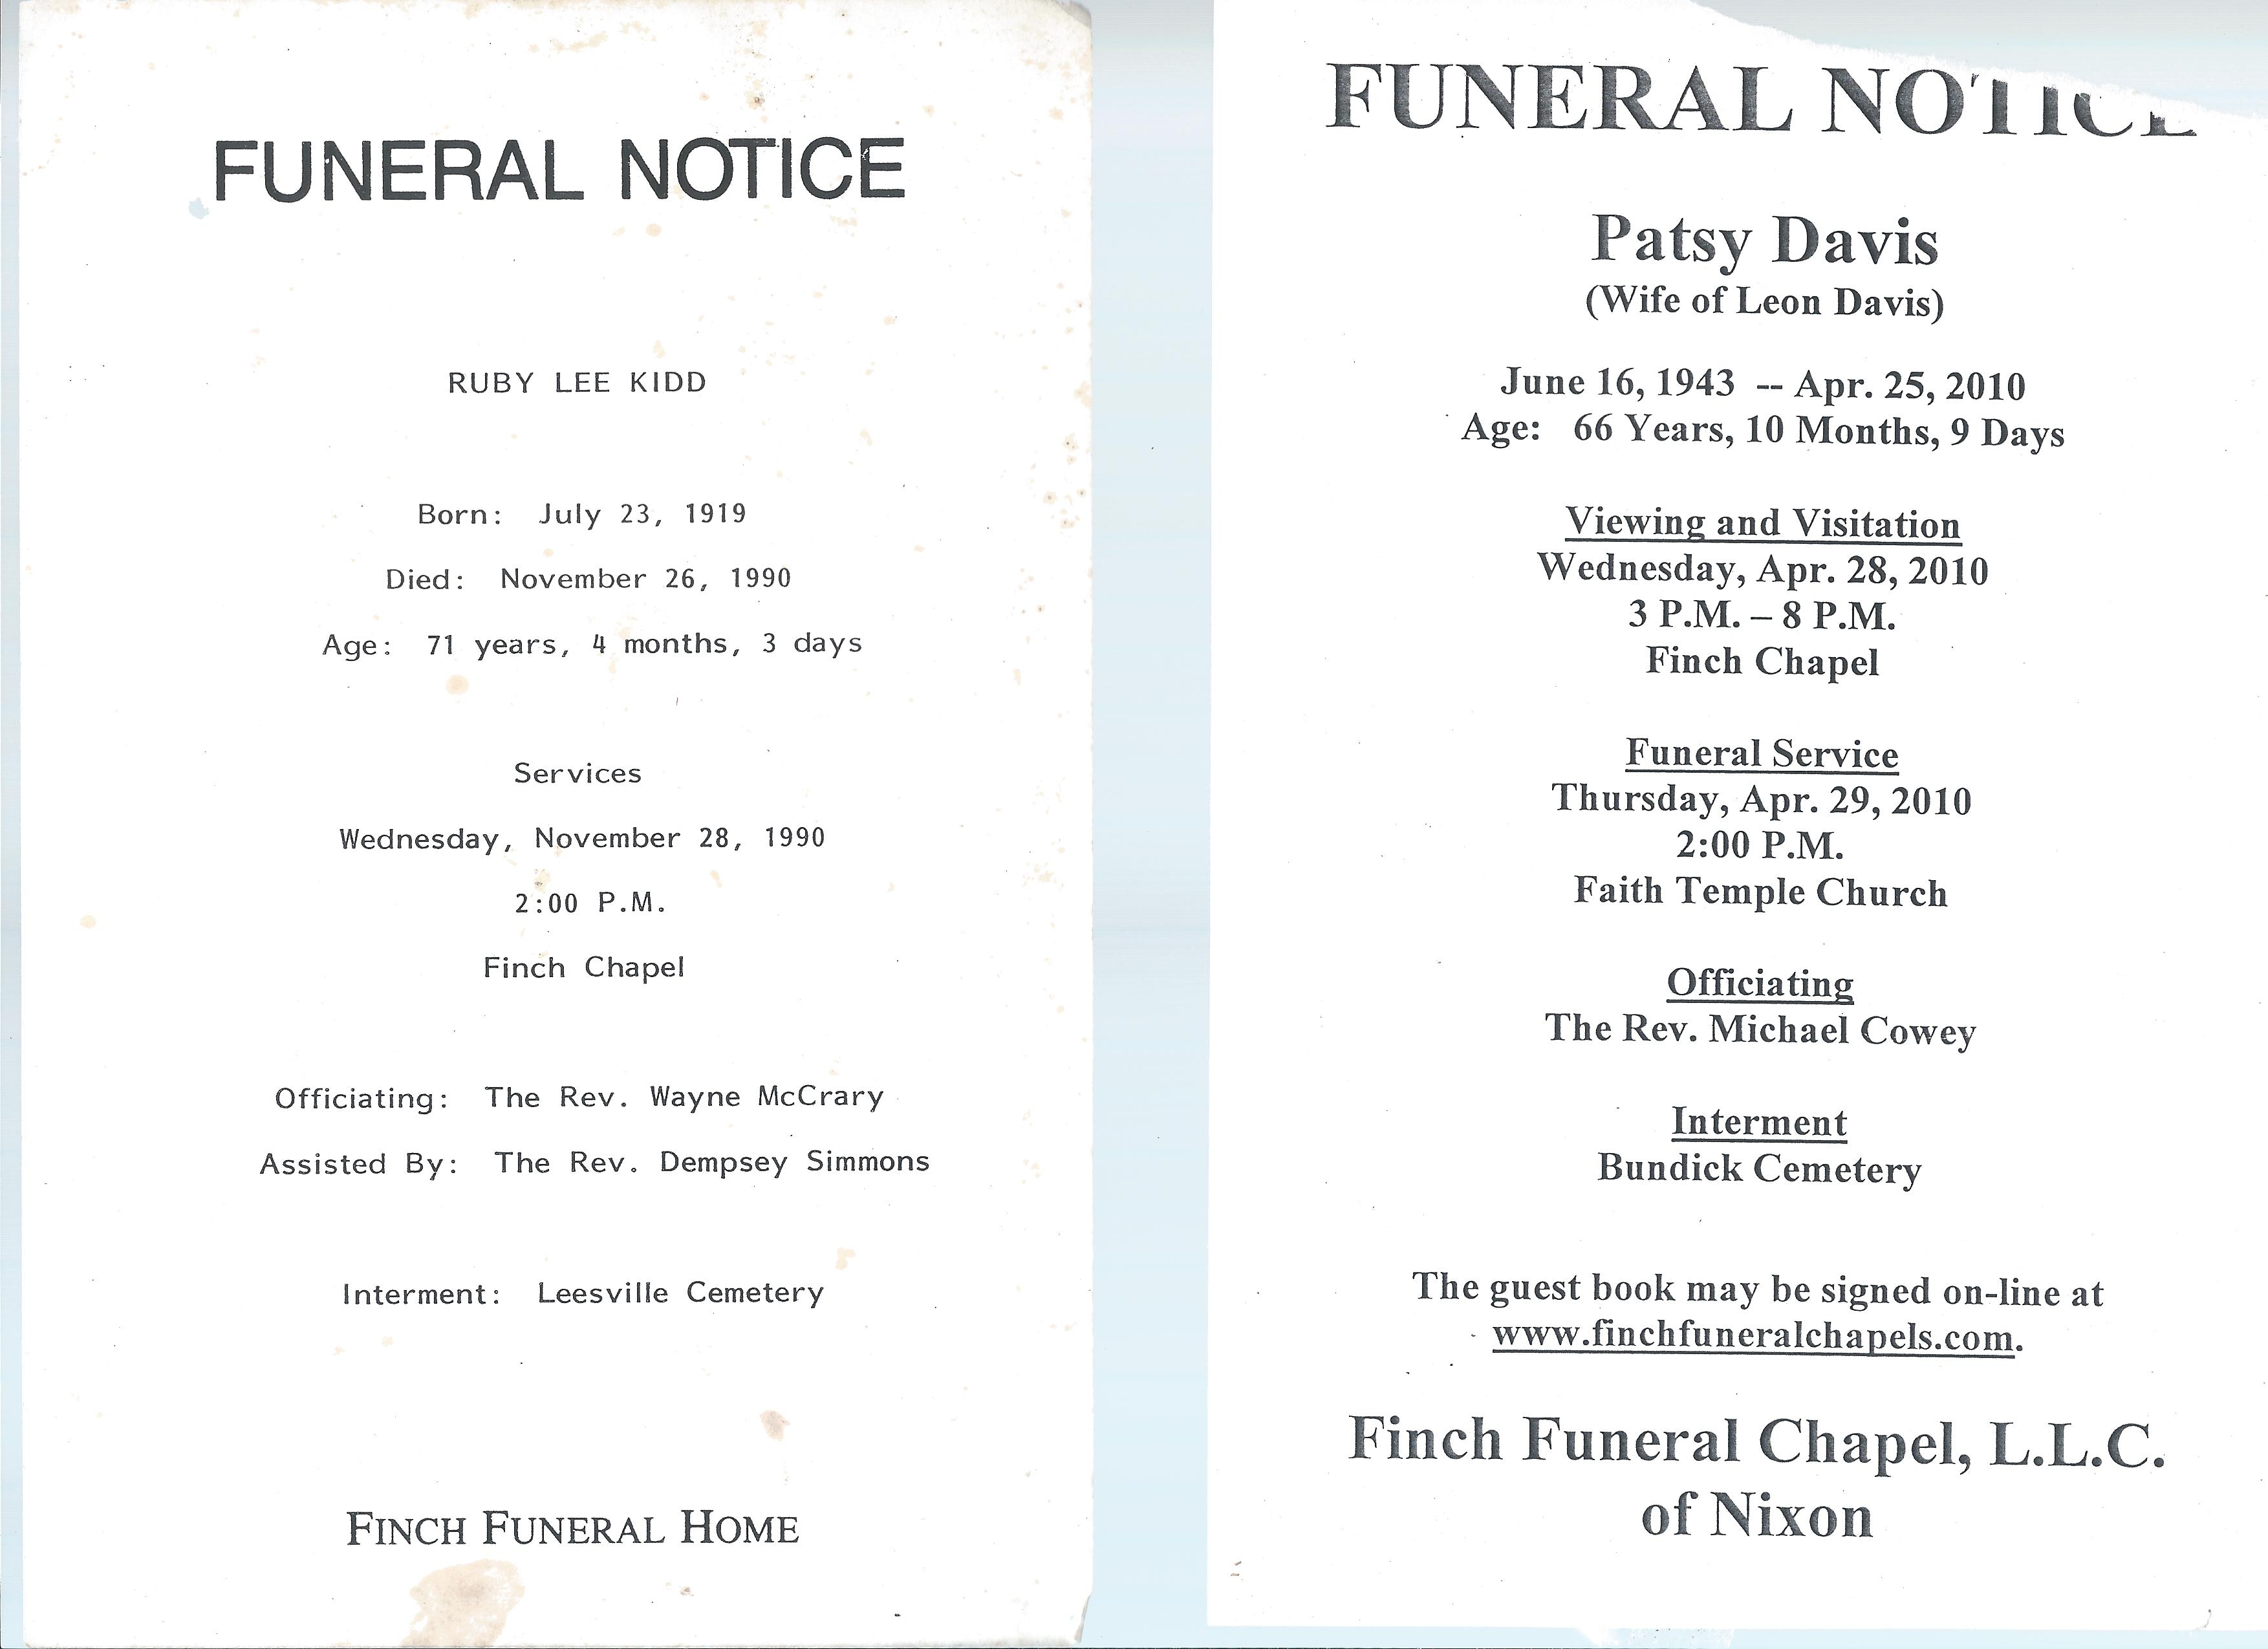 Pat Davis Finch's Funeral